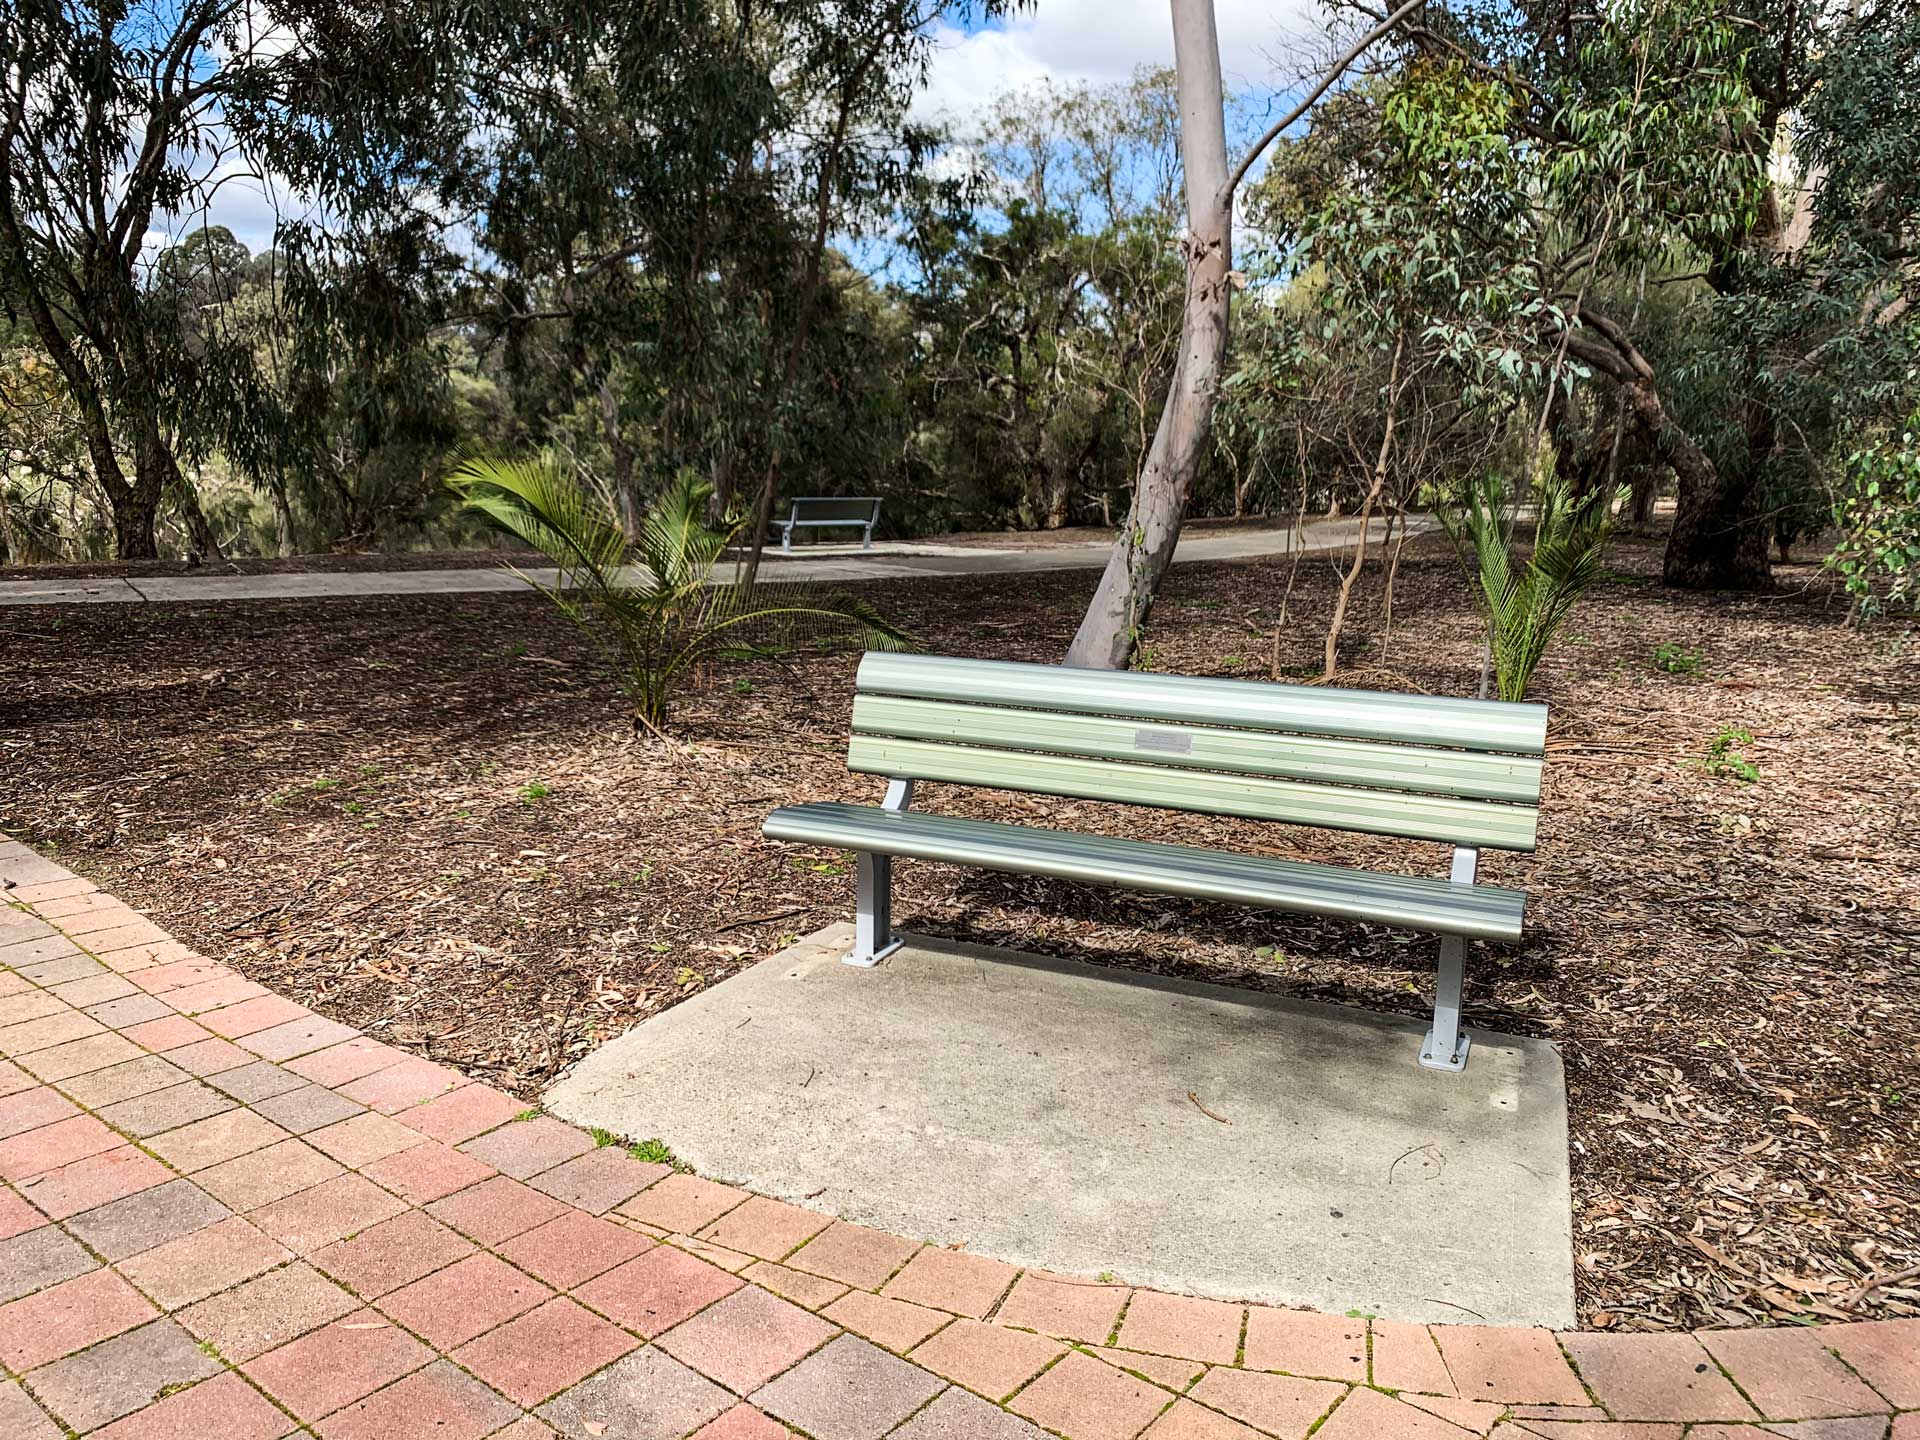 A memorial park bench at Tomato Lake.